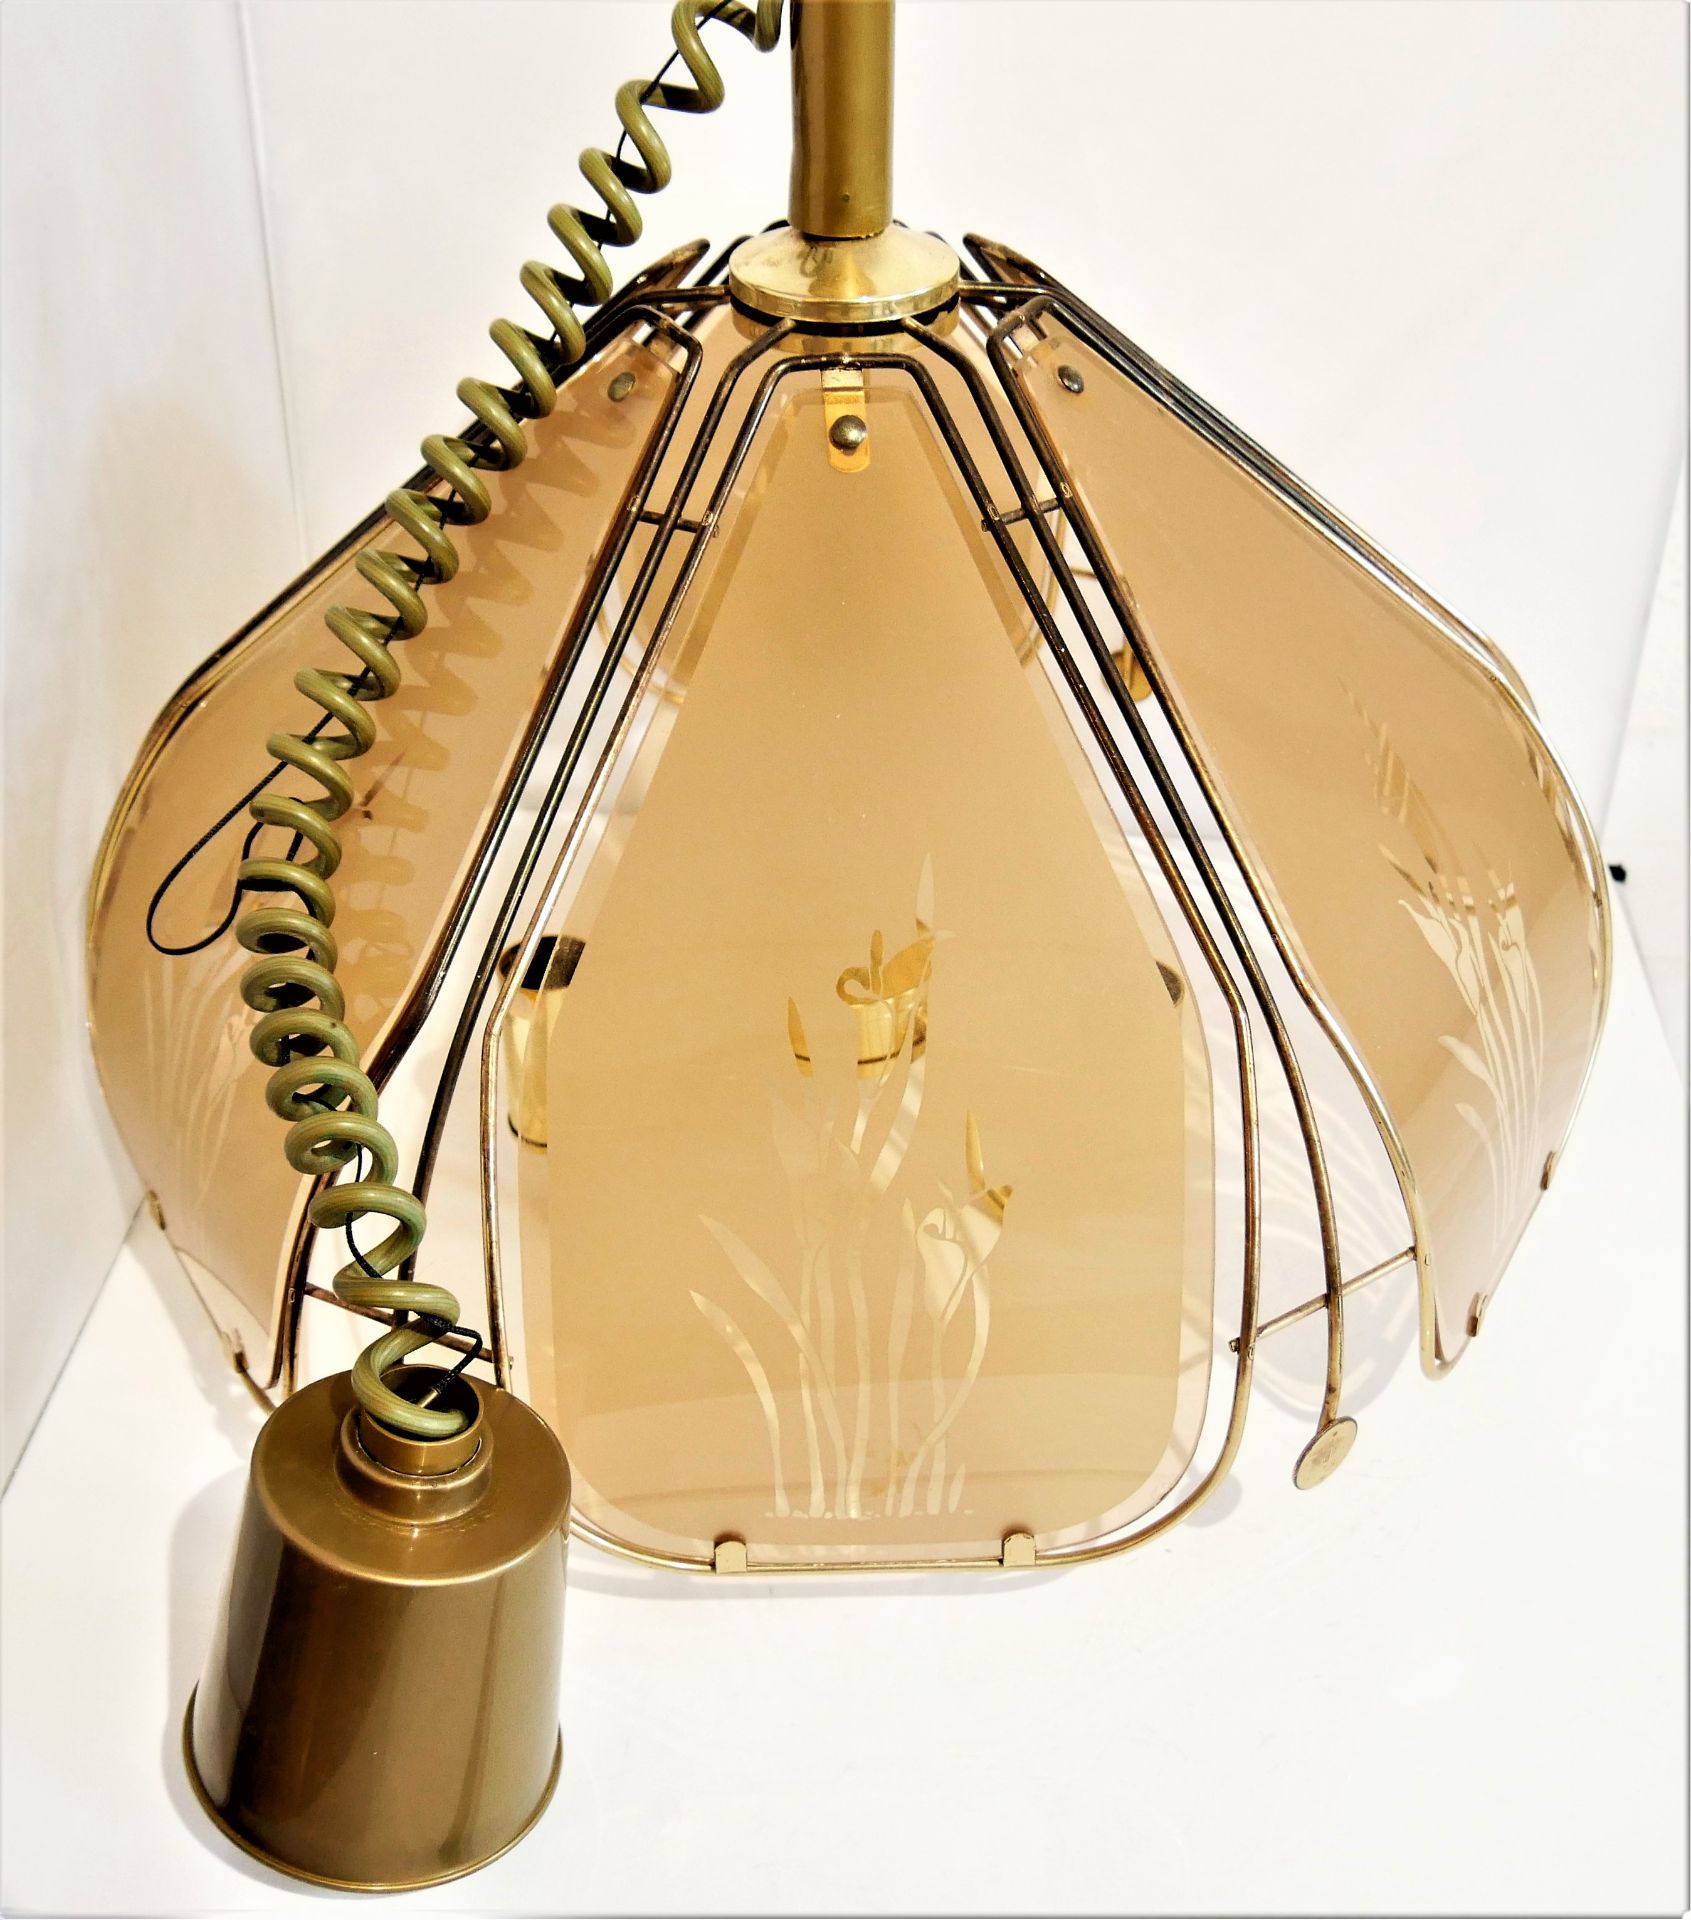 1 Hänge-Glaslampe mit Messing "Blumen", 80er Jahre. - Image 2 of 2